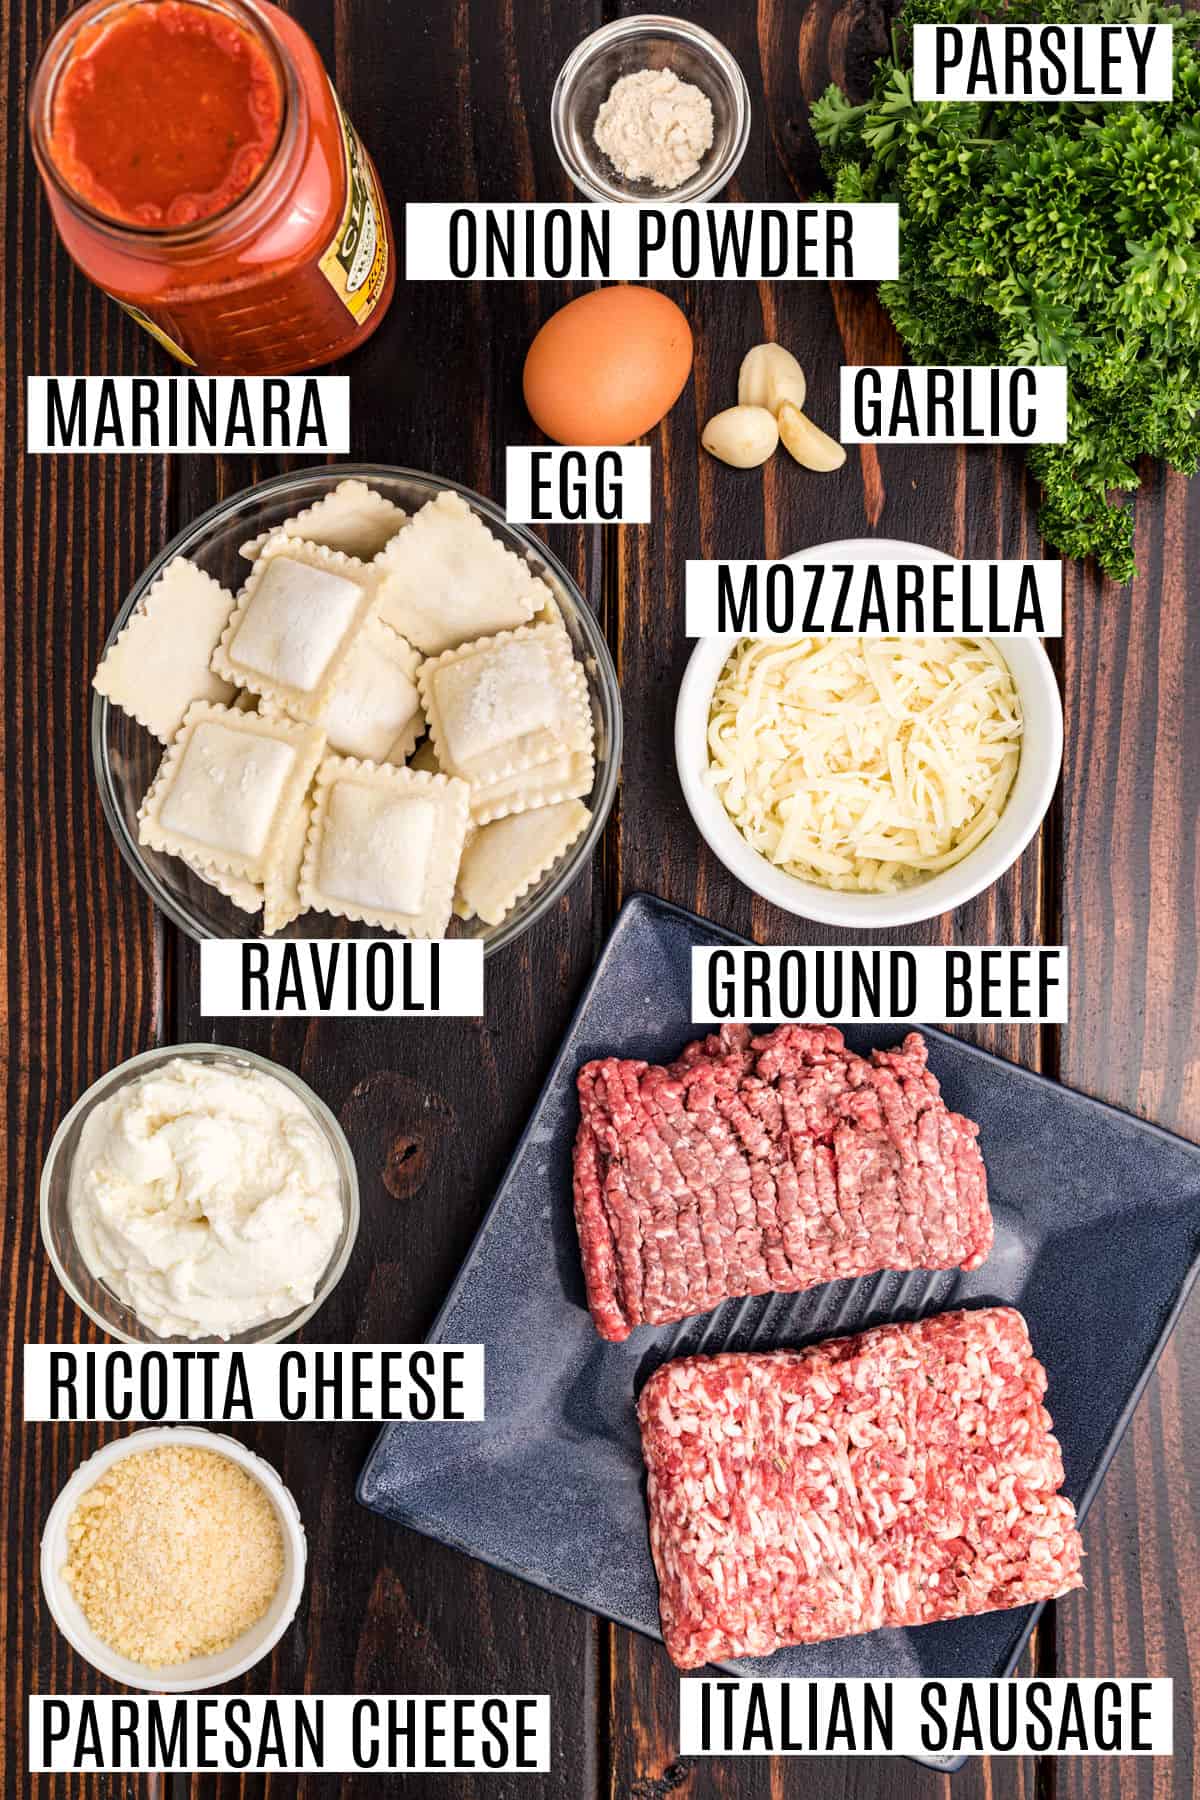 Ingredients needed for ravioli lasagna recipe.